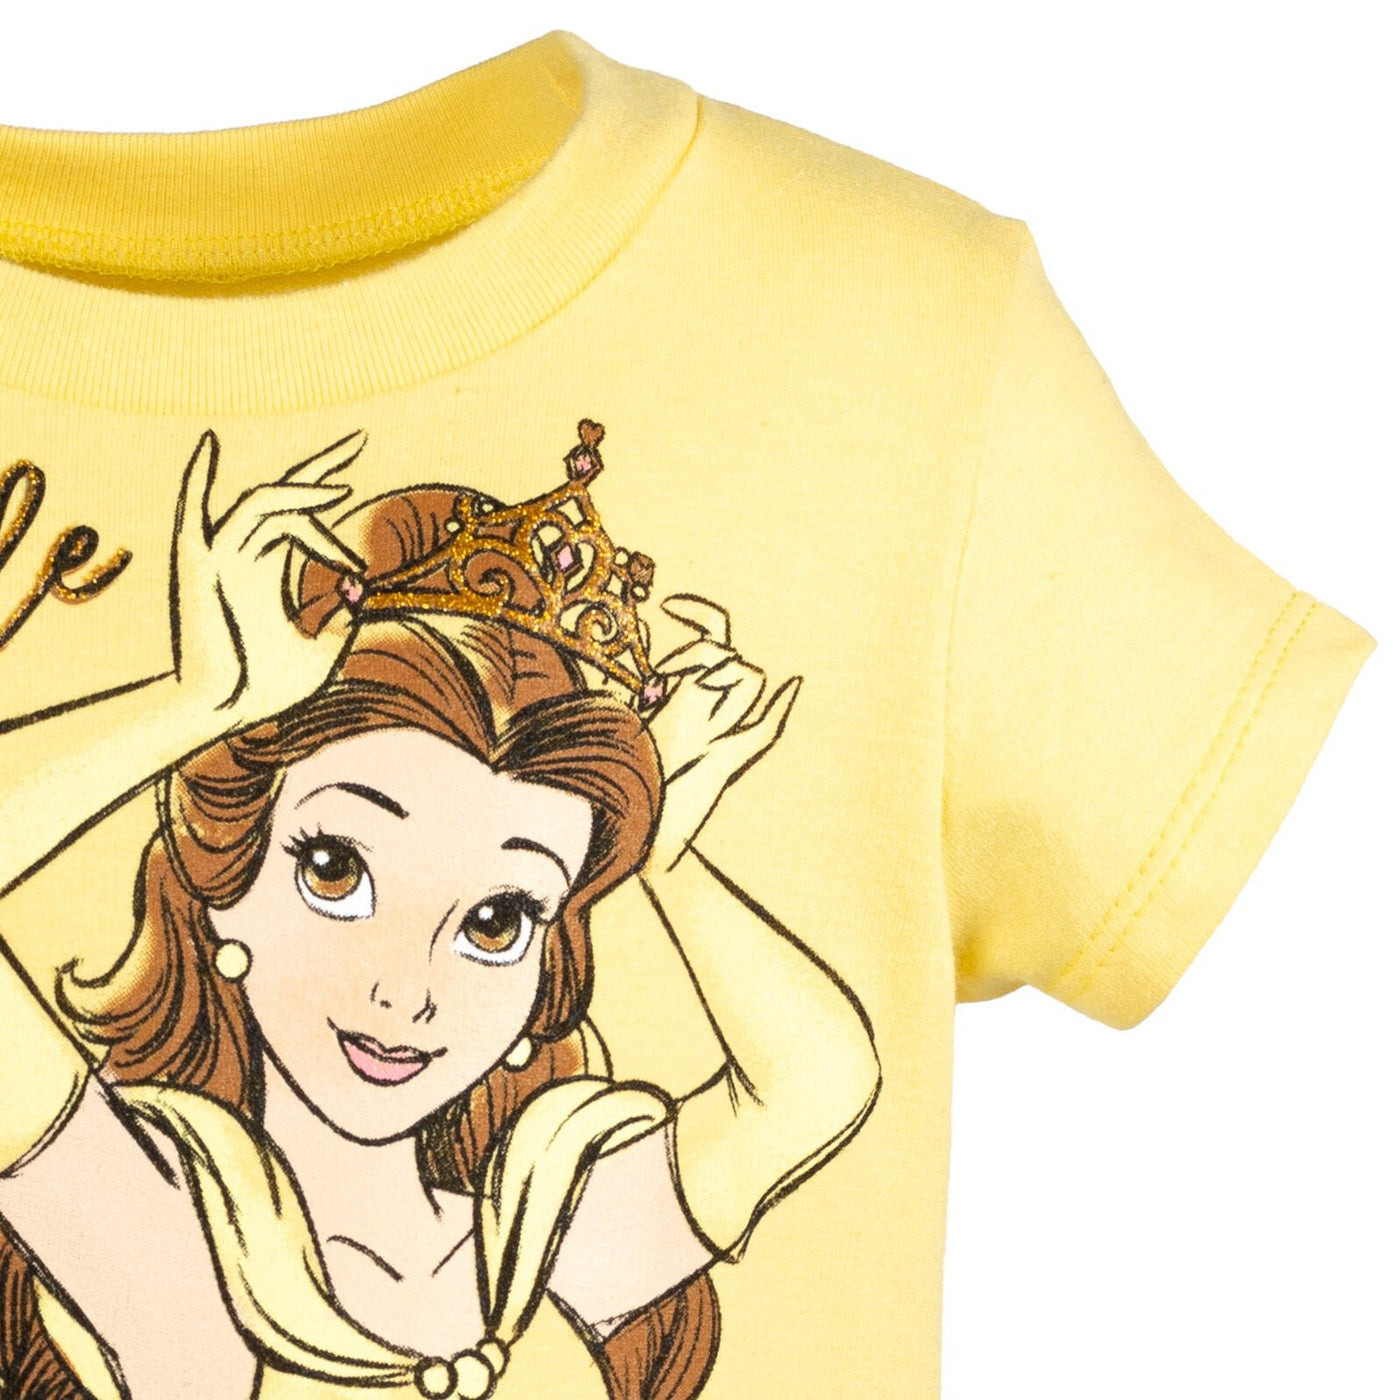 Disney Princess Belle French Terry Dress - imagikids